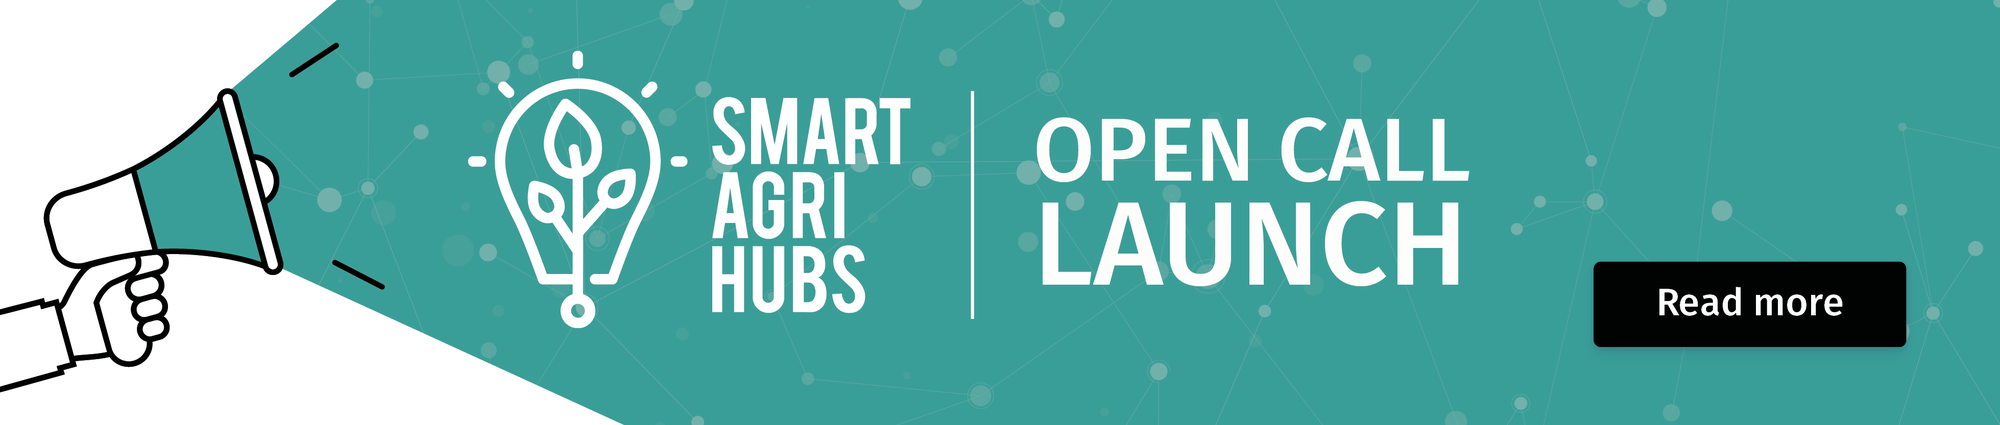 SmartAgriHubs projekt - Open Call výzvy